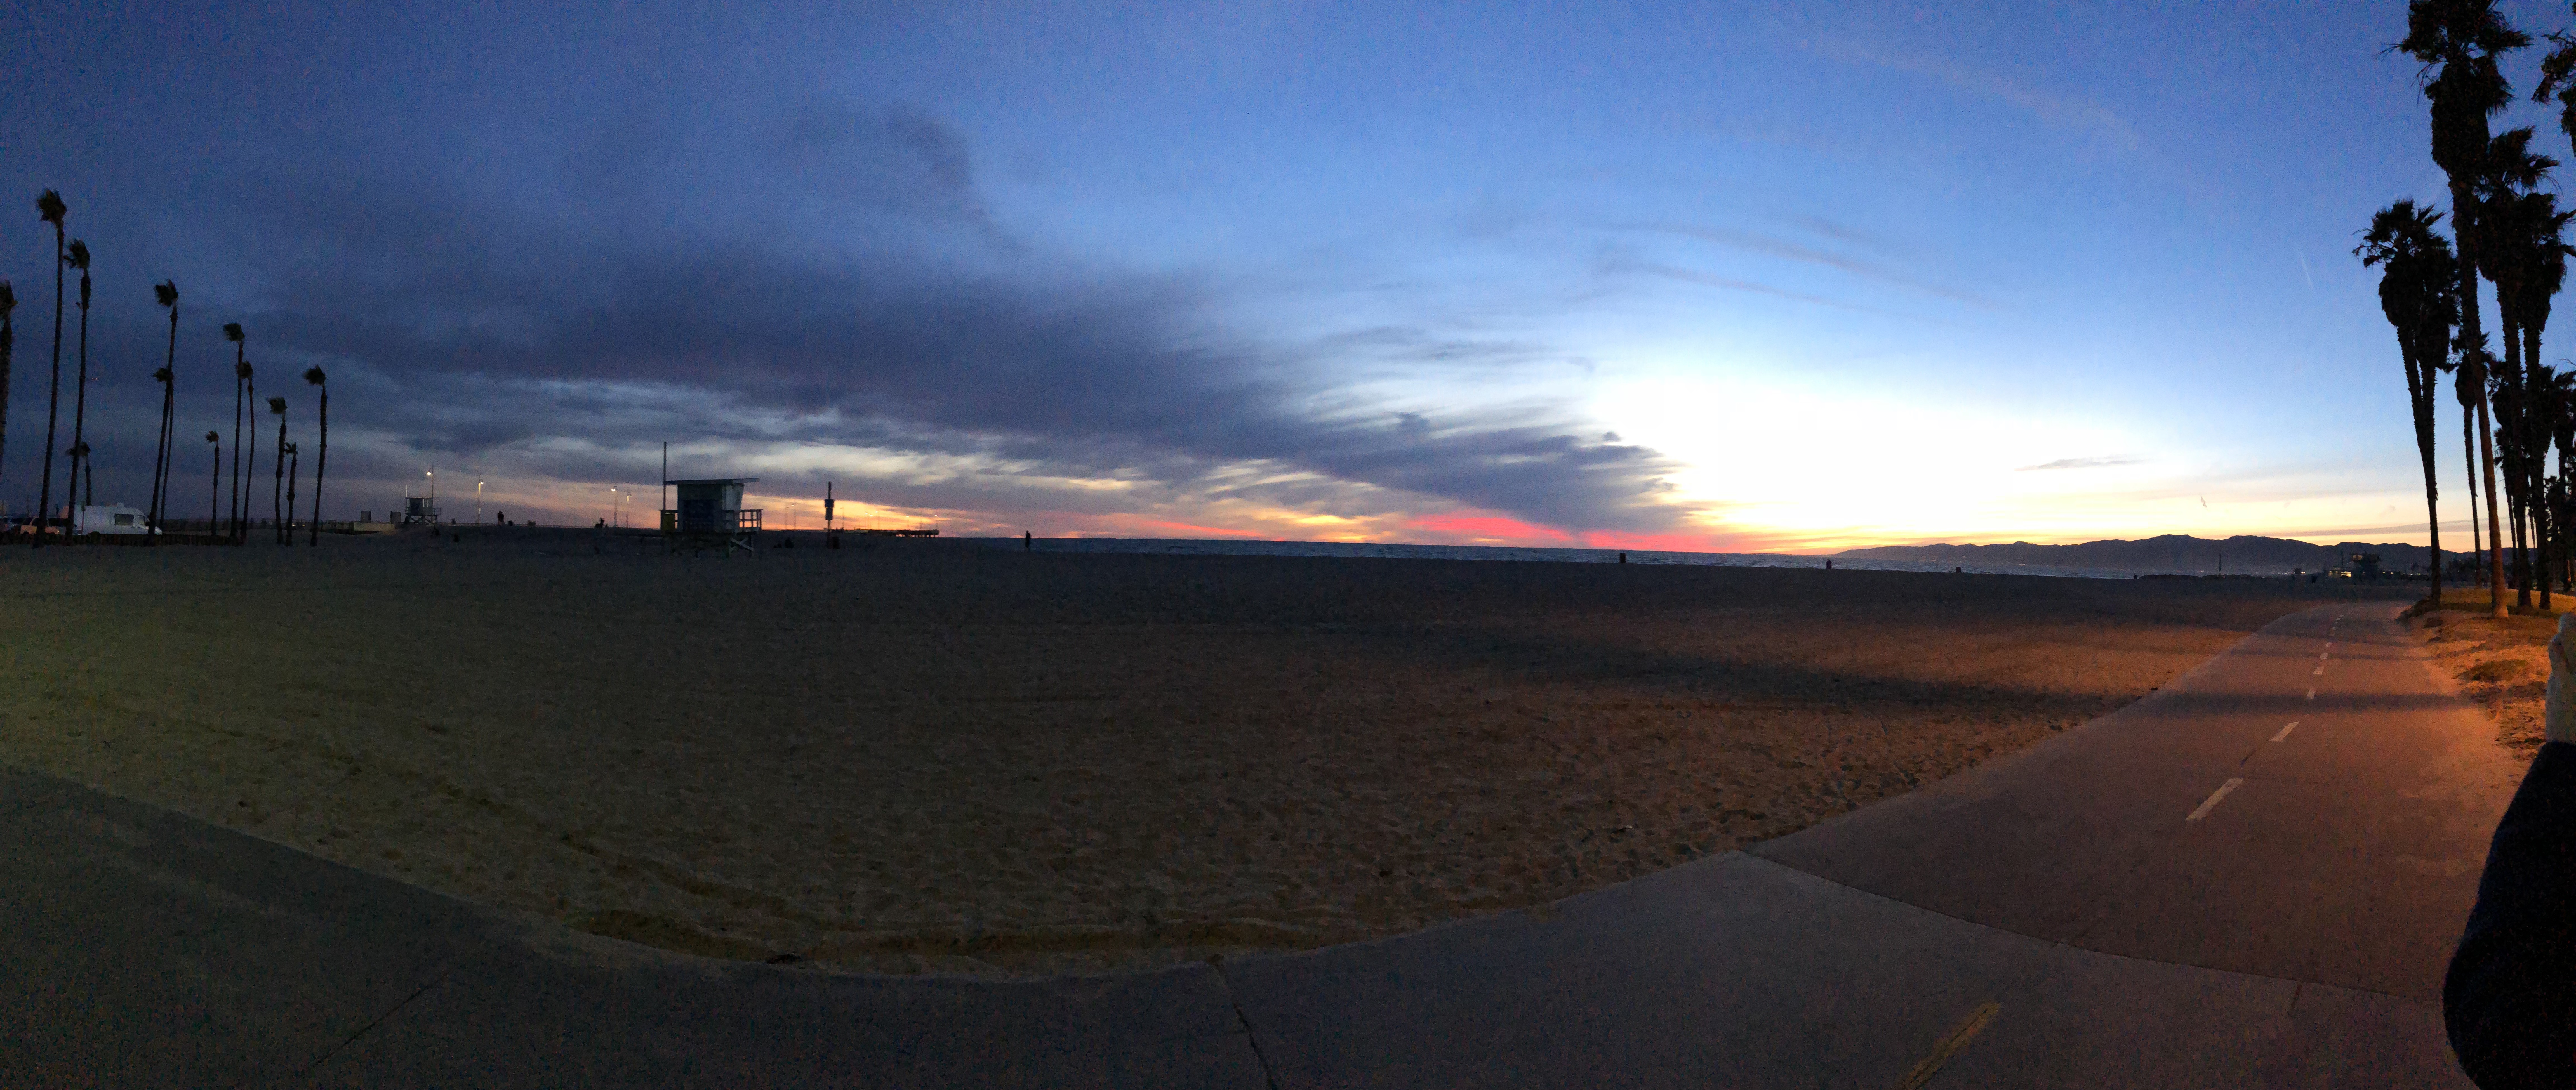 The sunset behind Venice Beach